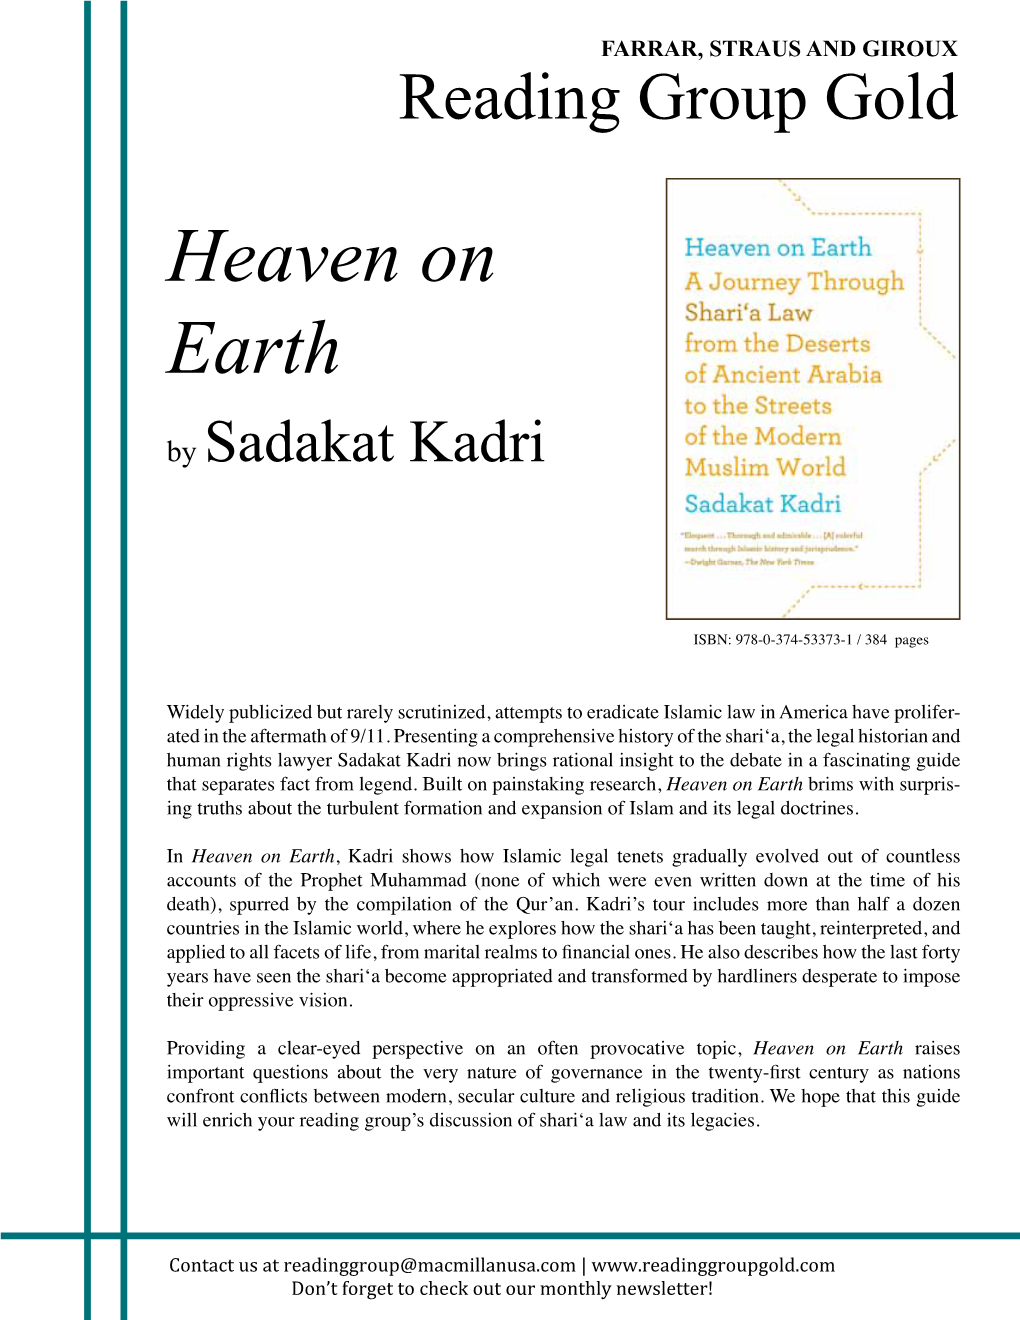 Heaven on Earth by Sadakat Kadri